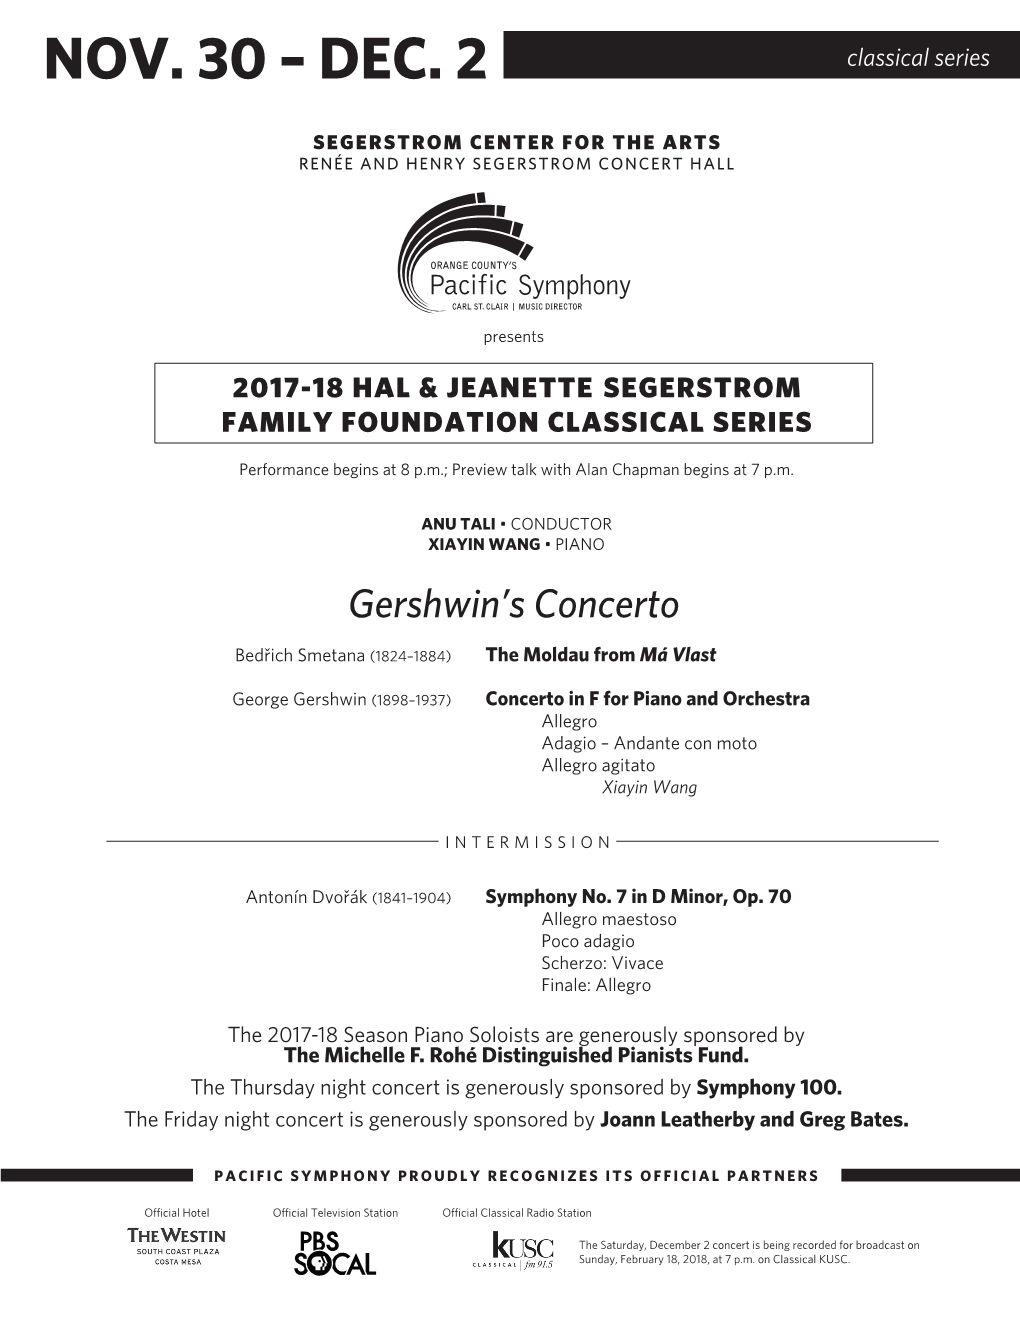 Gershwin's Concerto